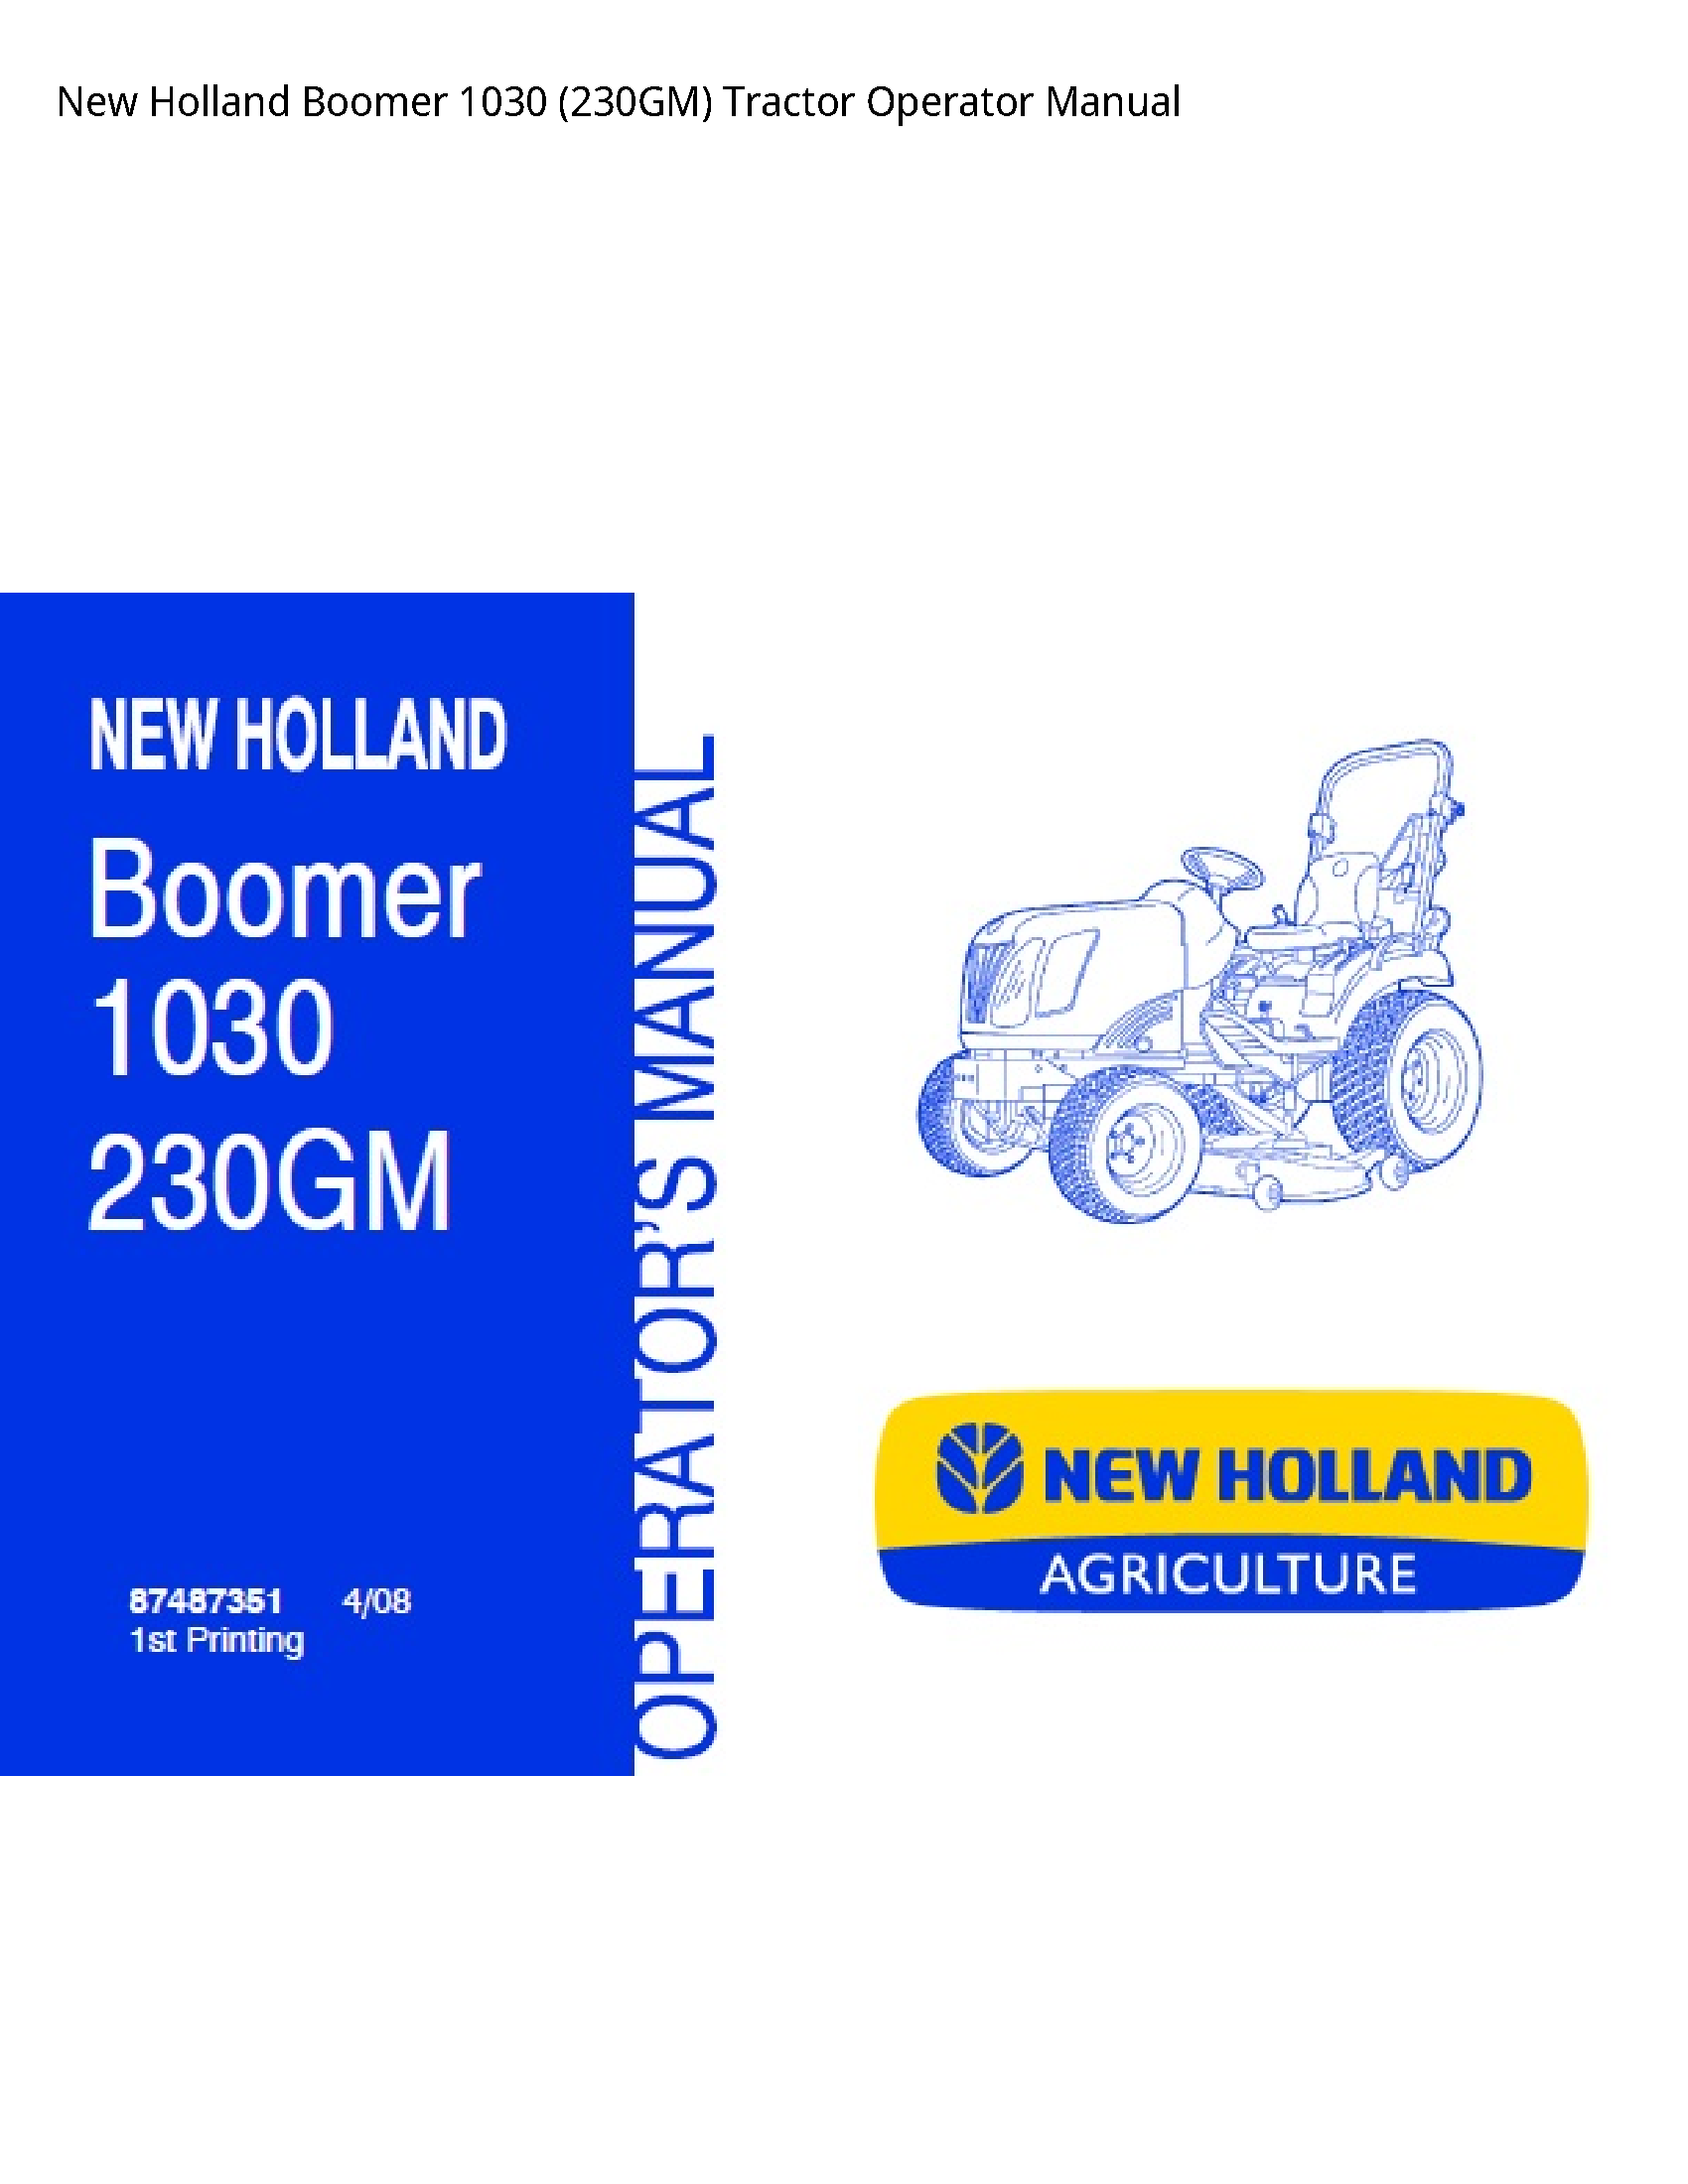 New Holland 1030 Boomer Tractor Operator manual